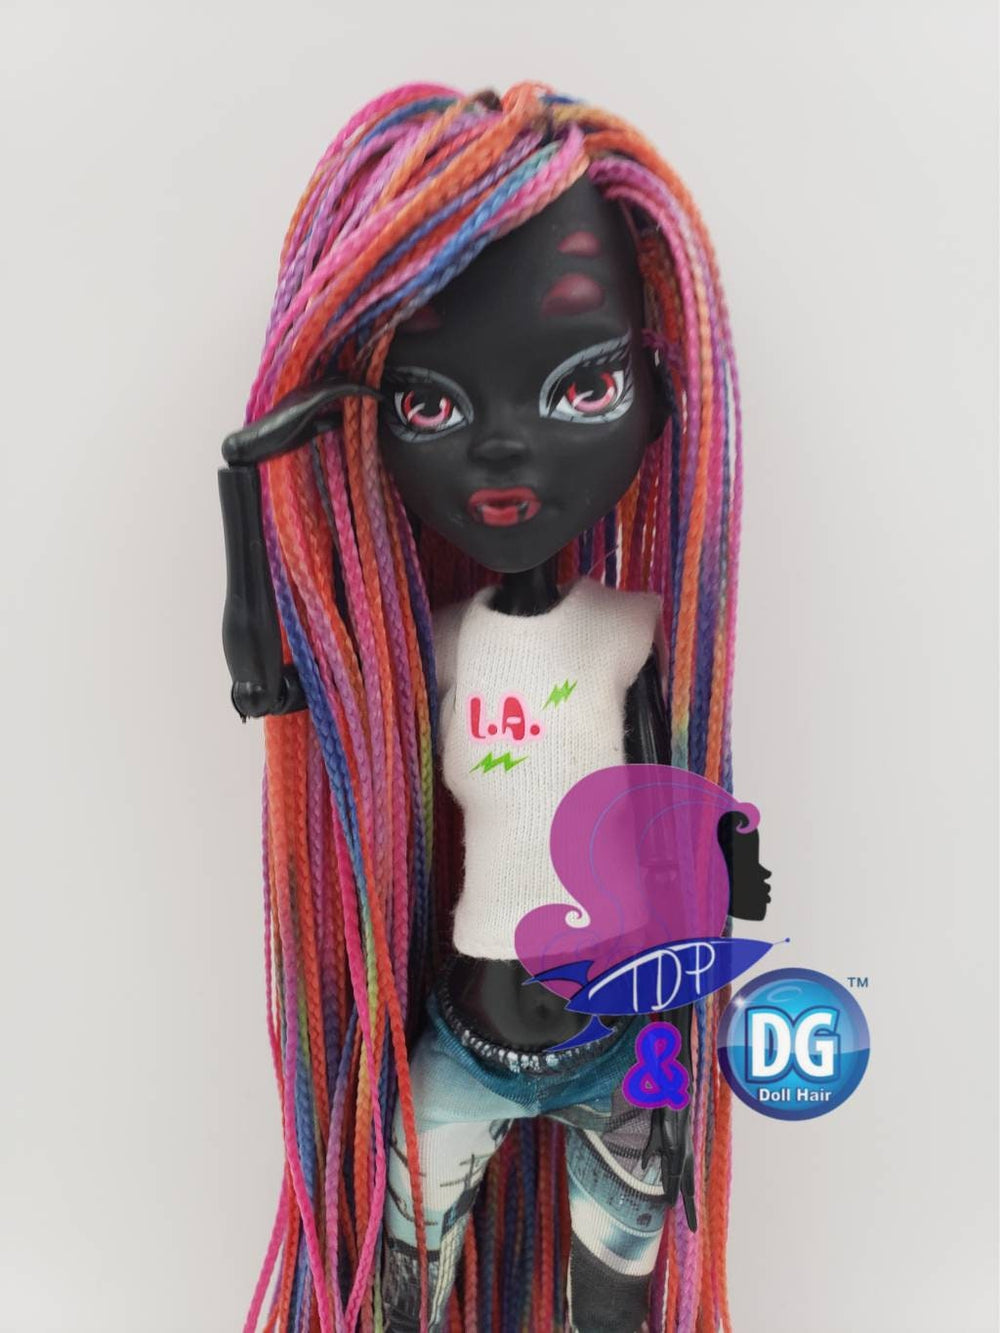 DG HQ™ Nylon Rainbow RBH162 Micro Mini Braids 2mm Doll Hair Rerooting Barbie™ Monster High™ Ever After Disney Princess Rainbow High lol omg